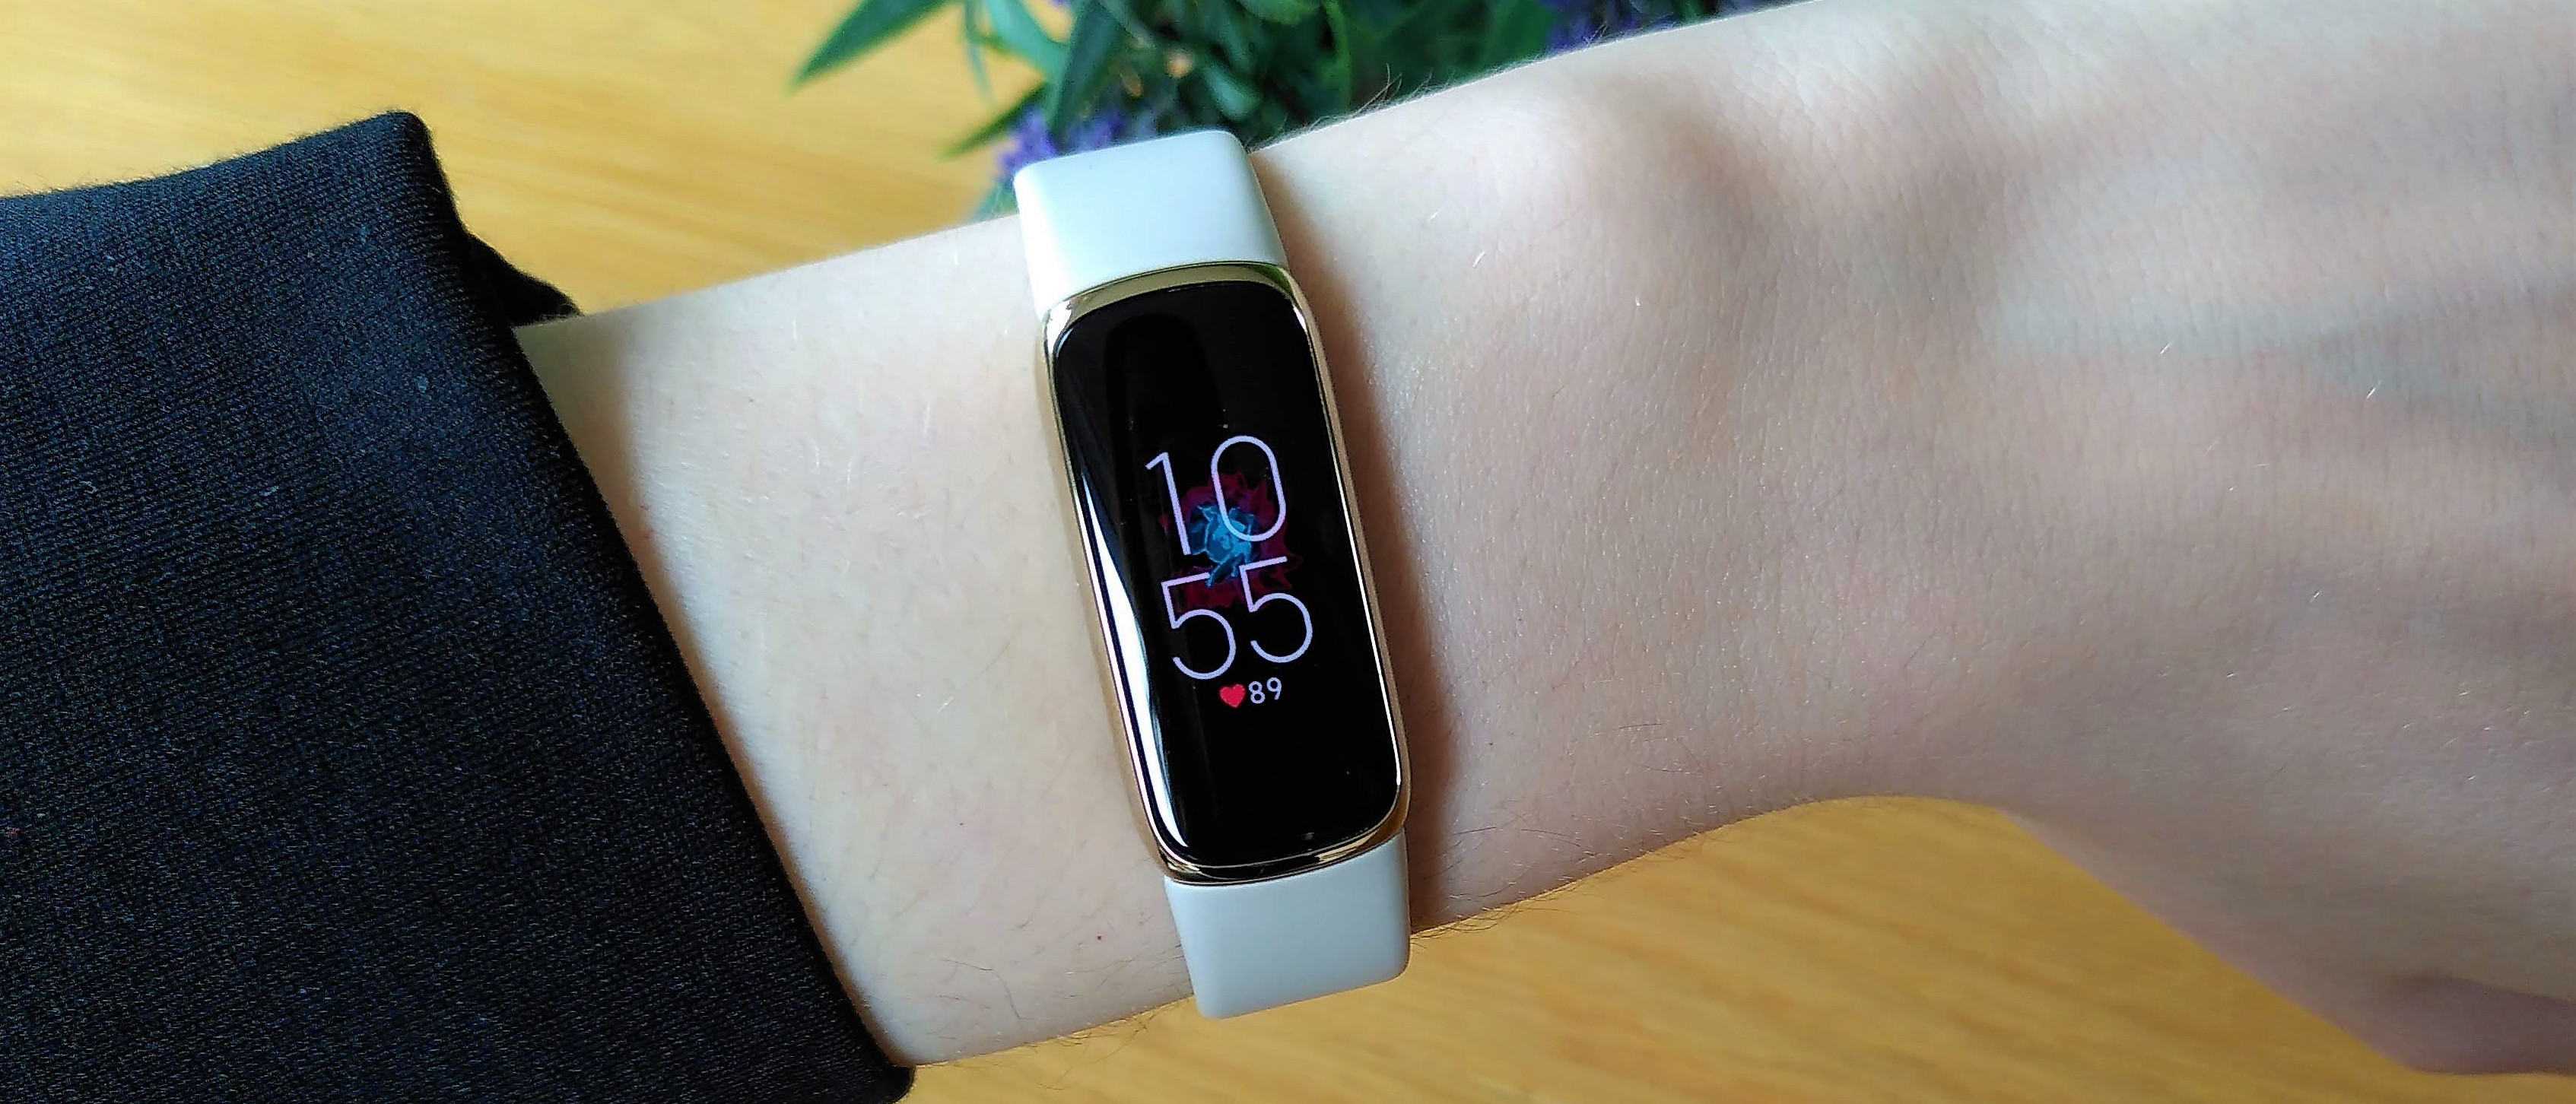 Xiaomi Mi Smart Watch: Fitness Tracker, GPS, and More – Stigma Watches